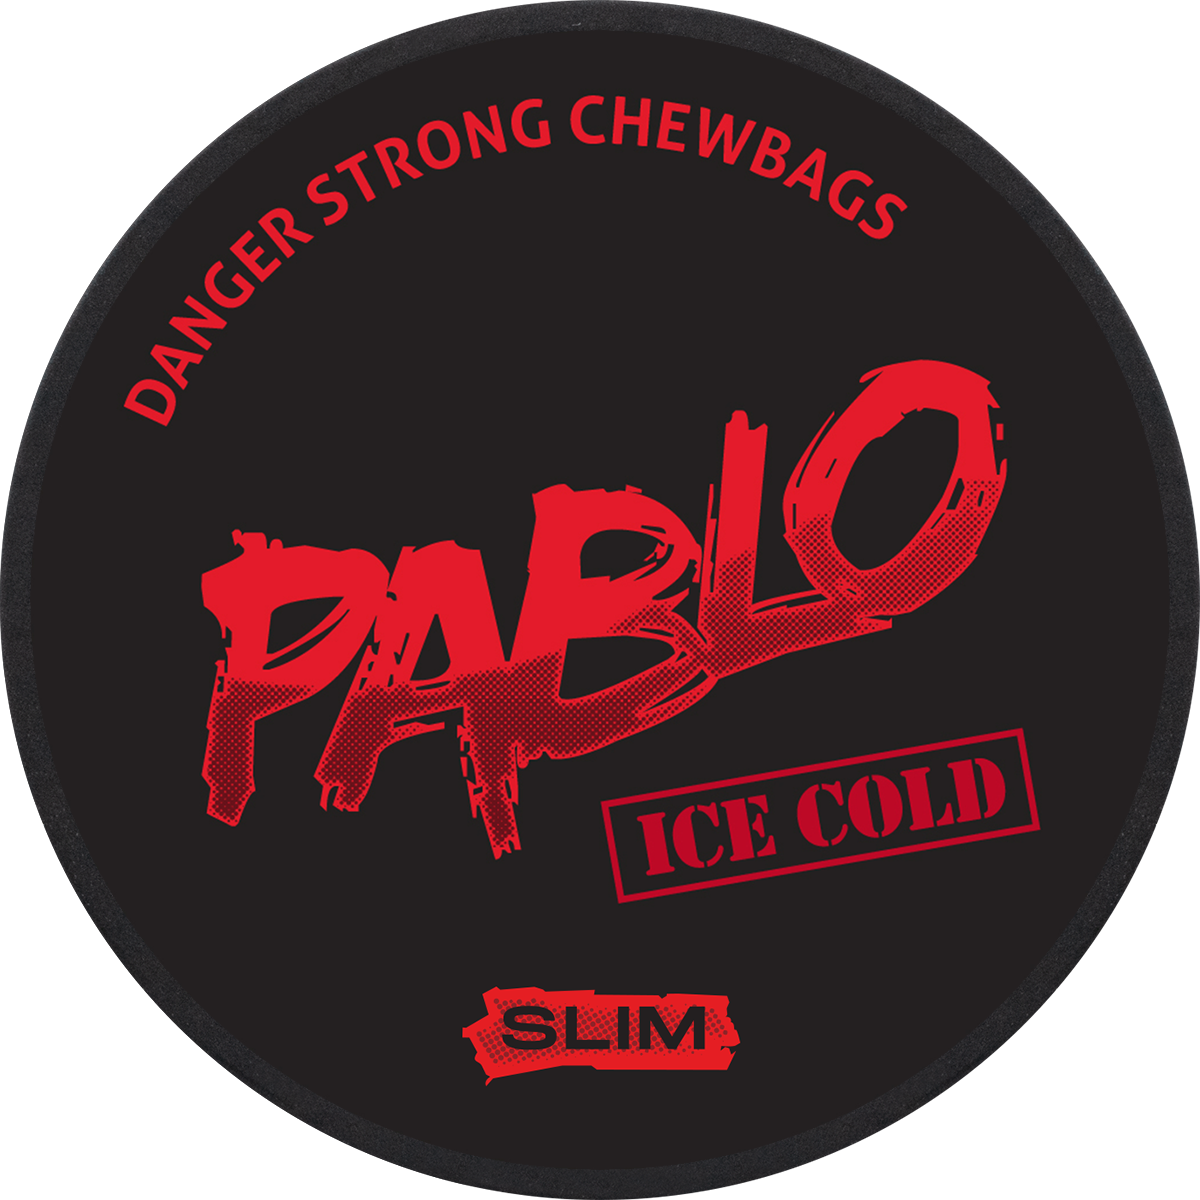 Pablo Ice Cold SLIM Chewbags 13g (German bottom label)image